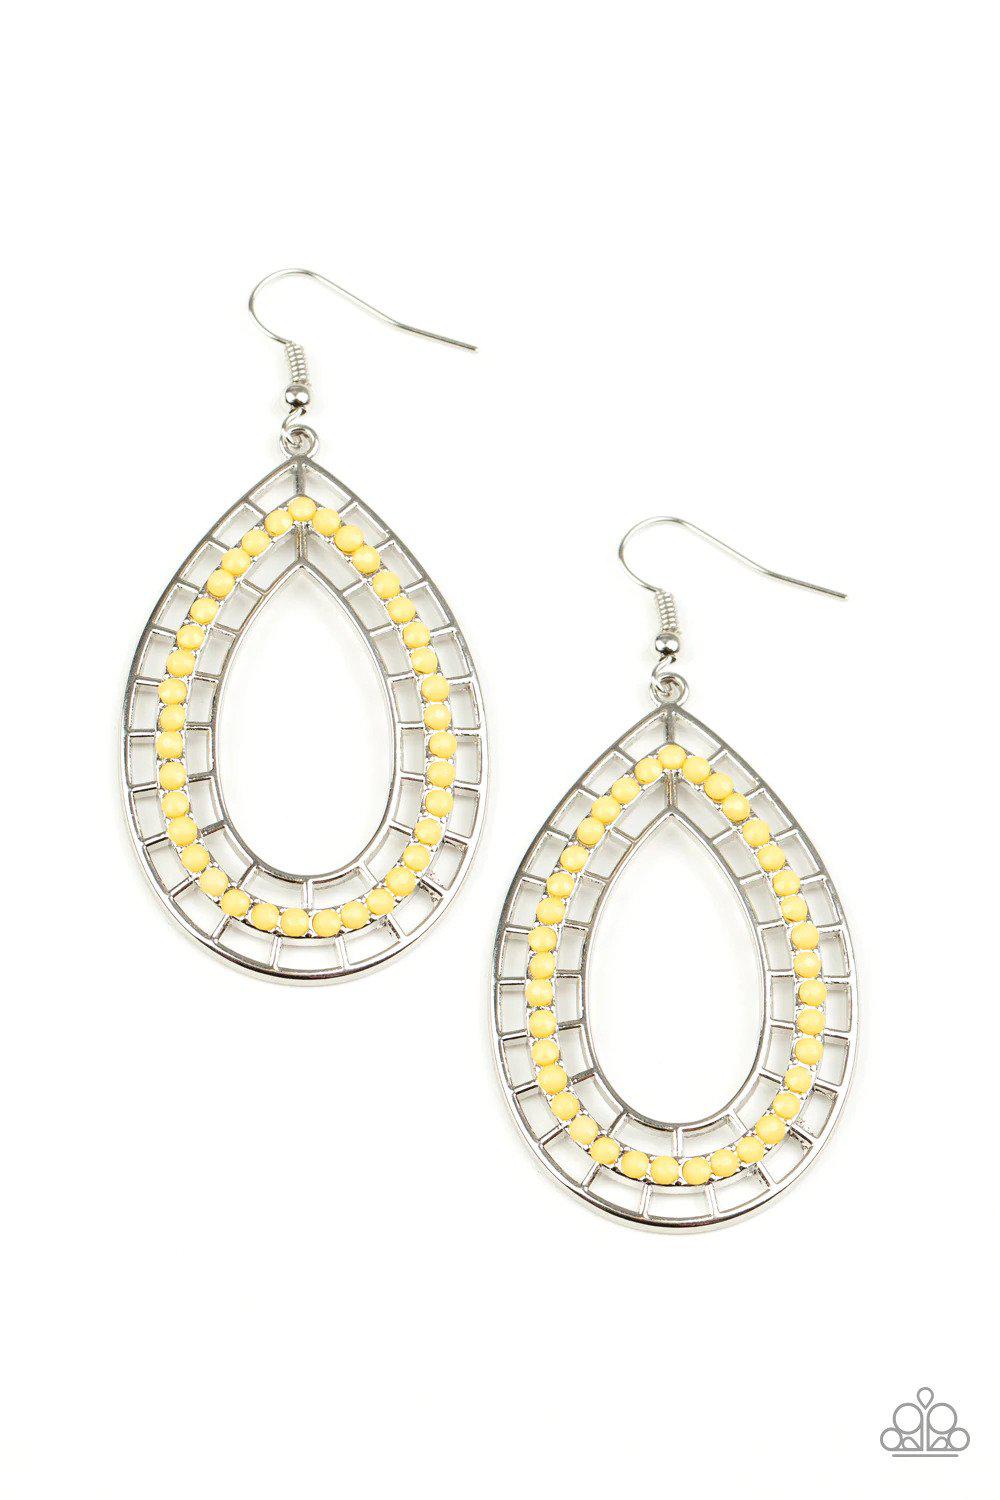 Fruity Fiesta Yellow Earrings - Paparazzi Accessories- lightbox - CarasShop.com - $5 Jewelry by Cara Jewels